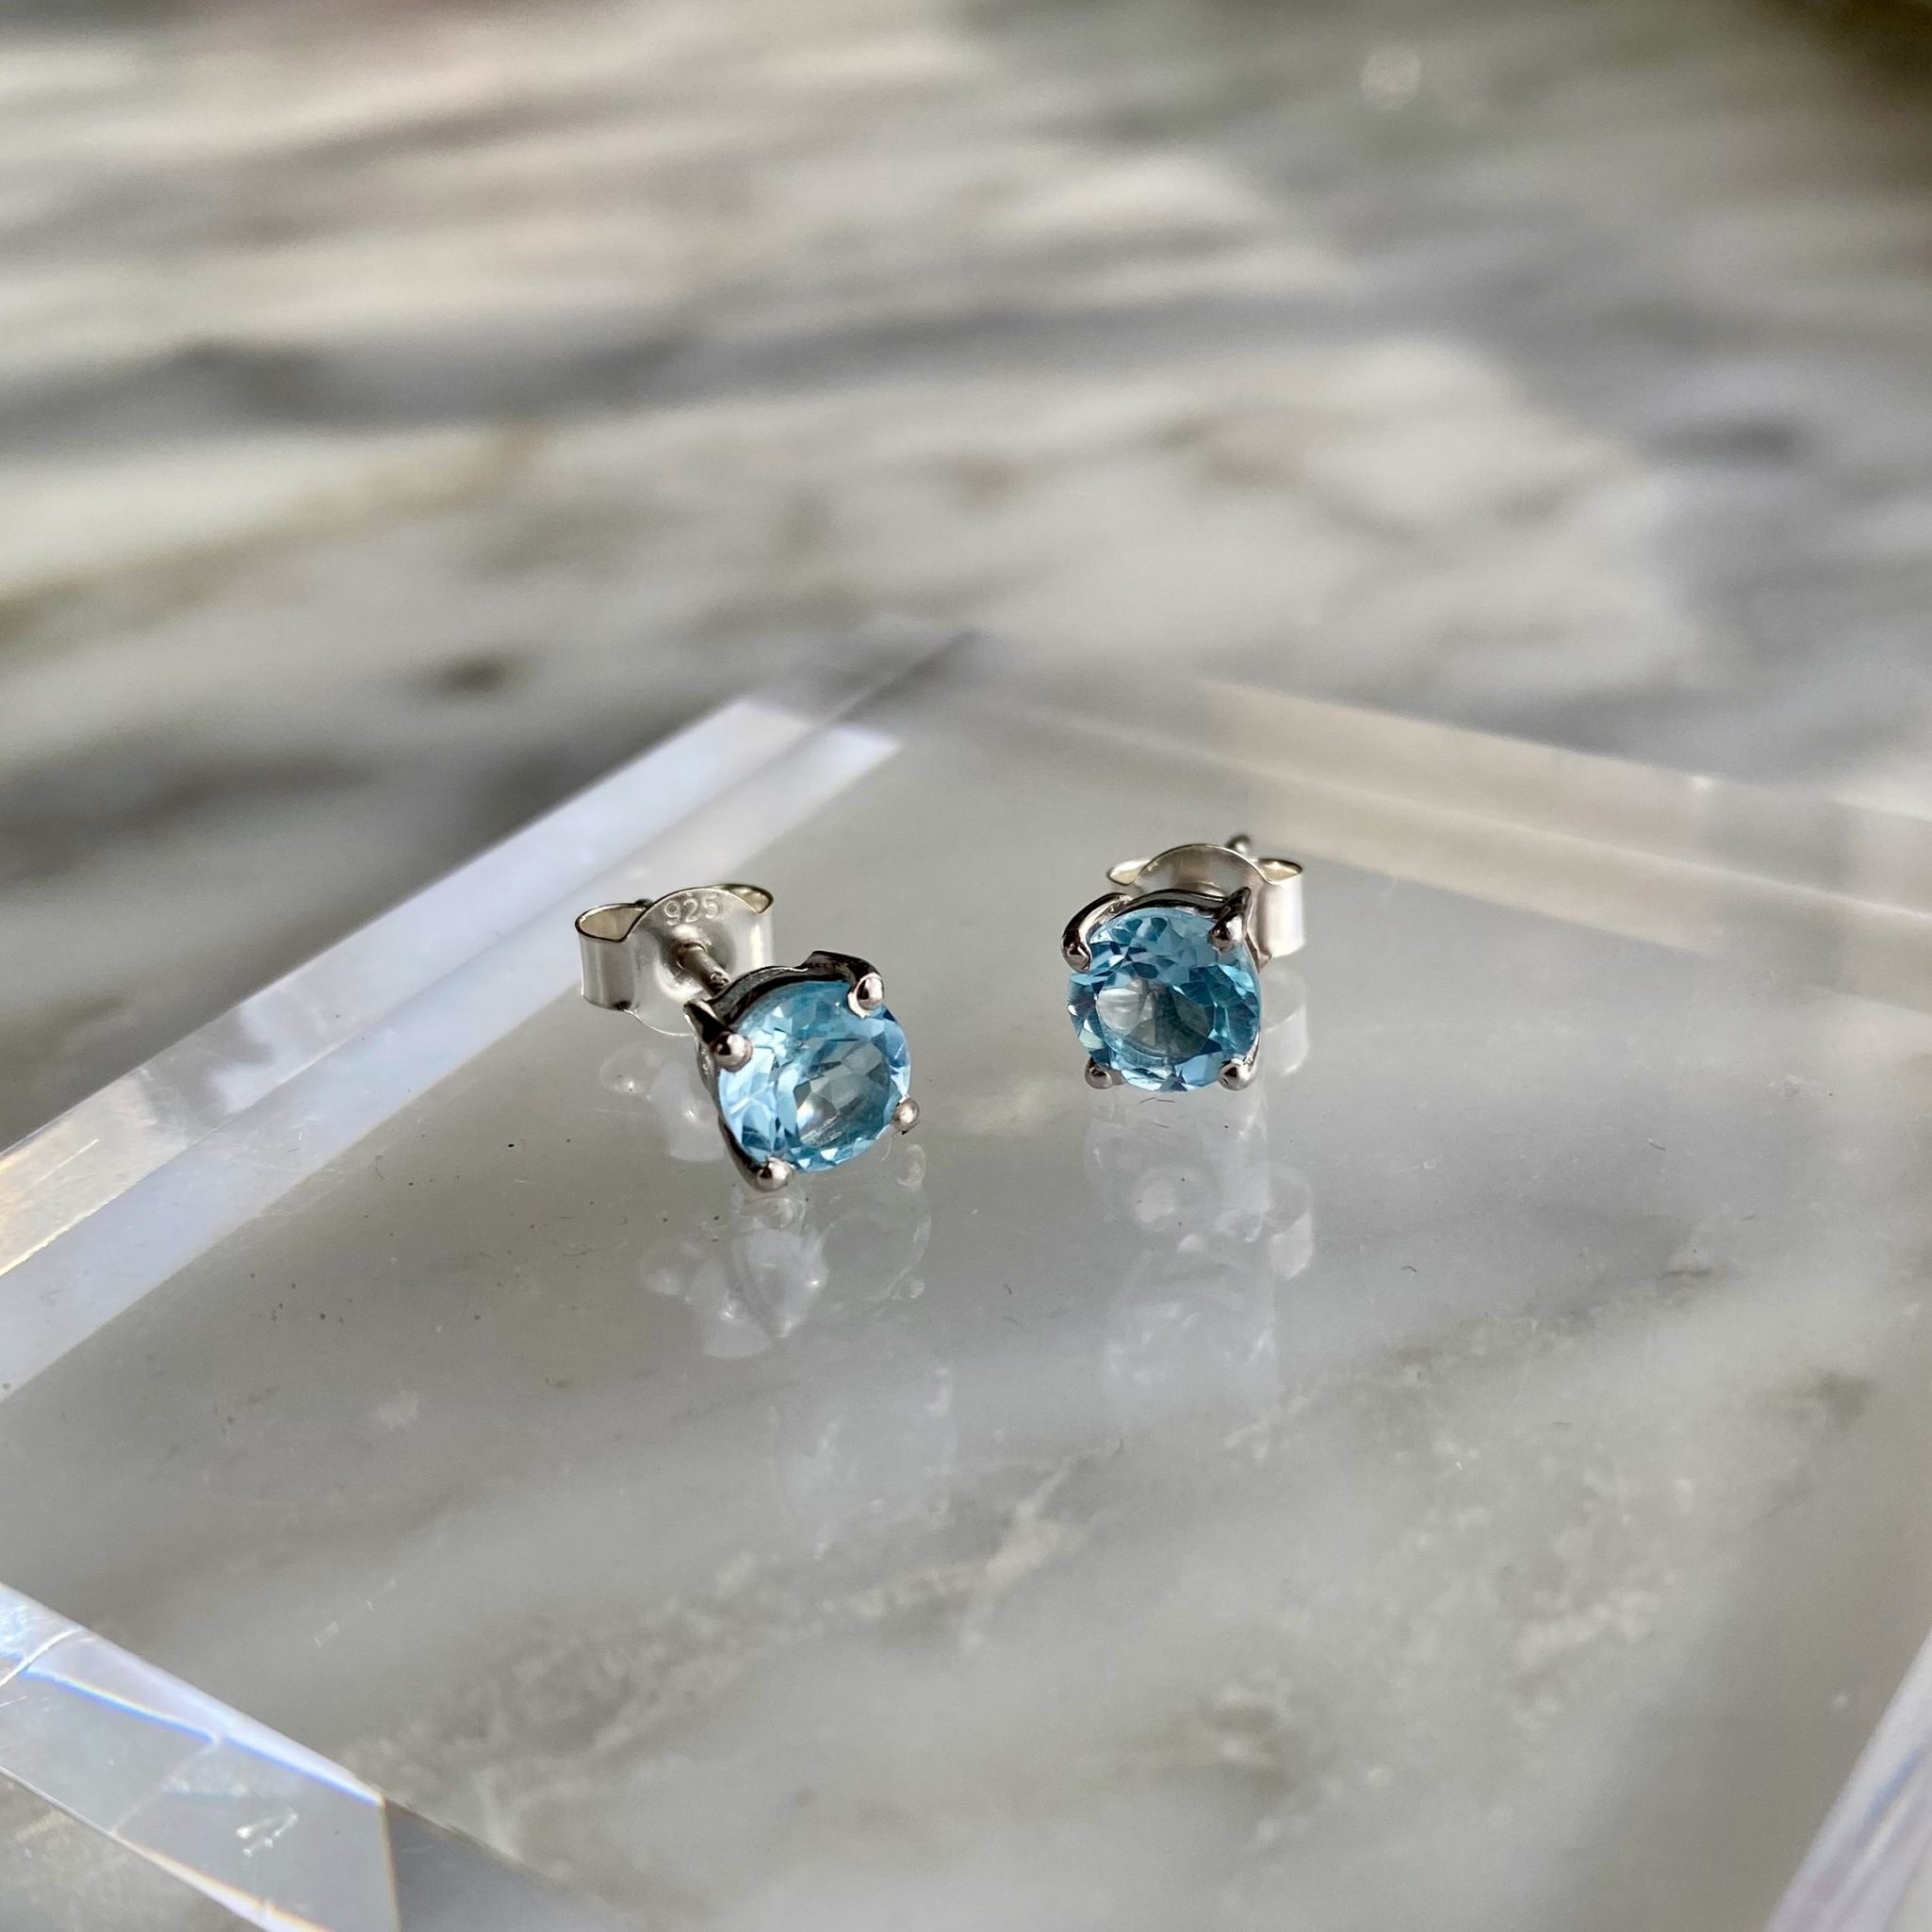 Blue Topaz Sterling Silver Stud Earrings - Boucles d'Oreilles Topaze Bleue Argent Sterling